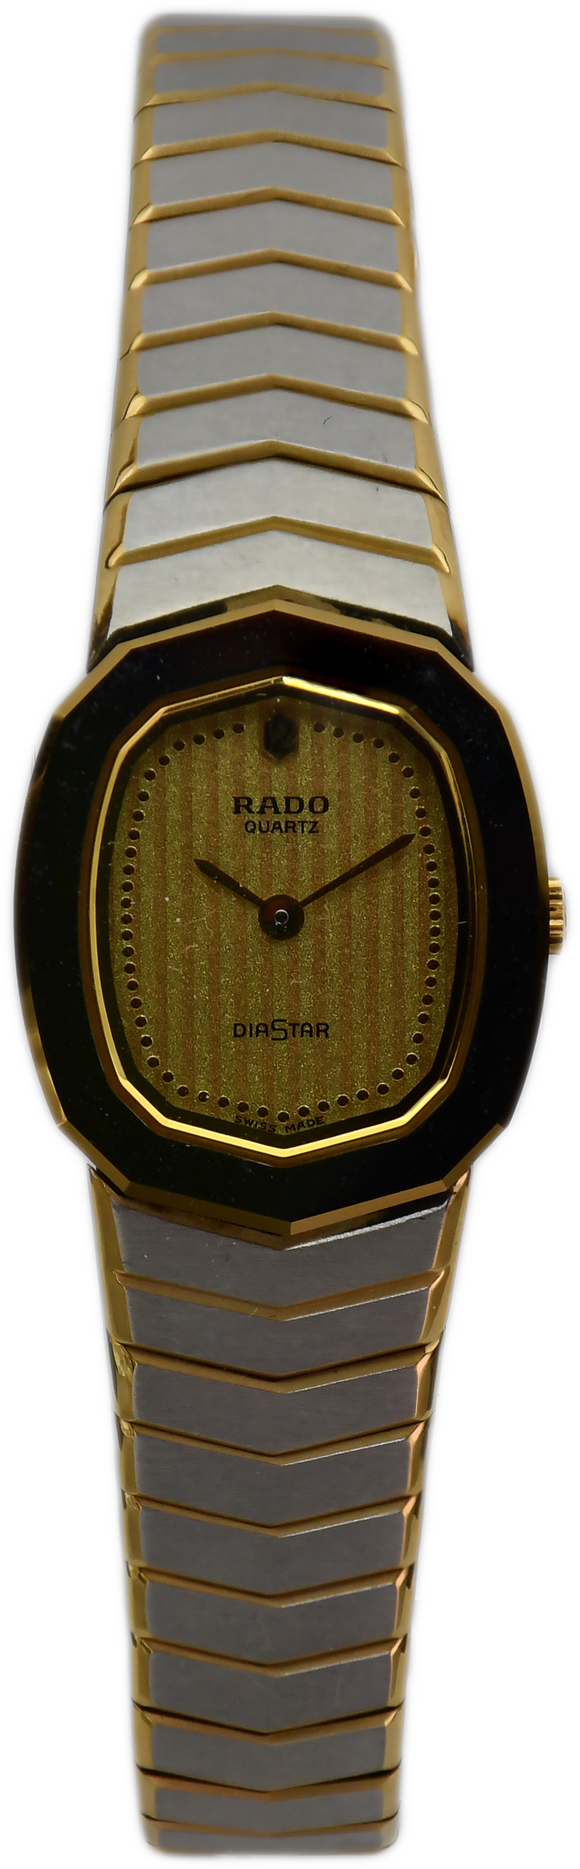 Rado DiaStar 153.0218.3 Gold - Parini's